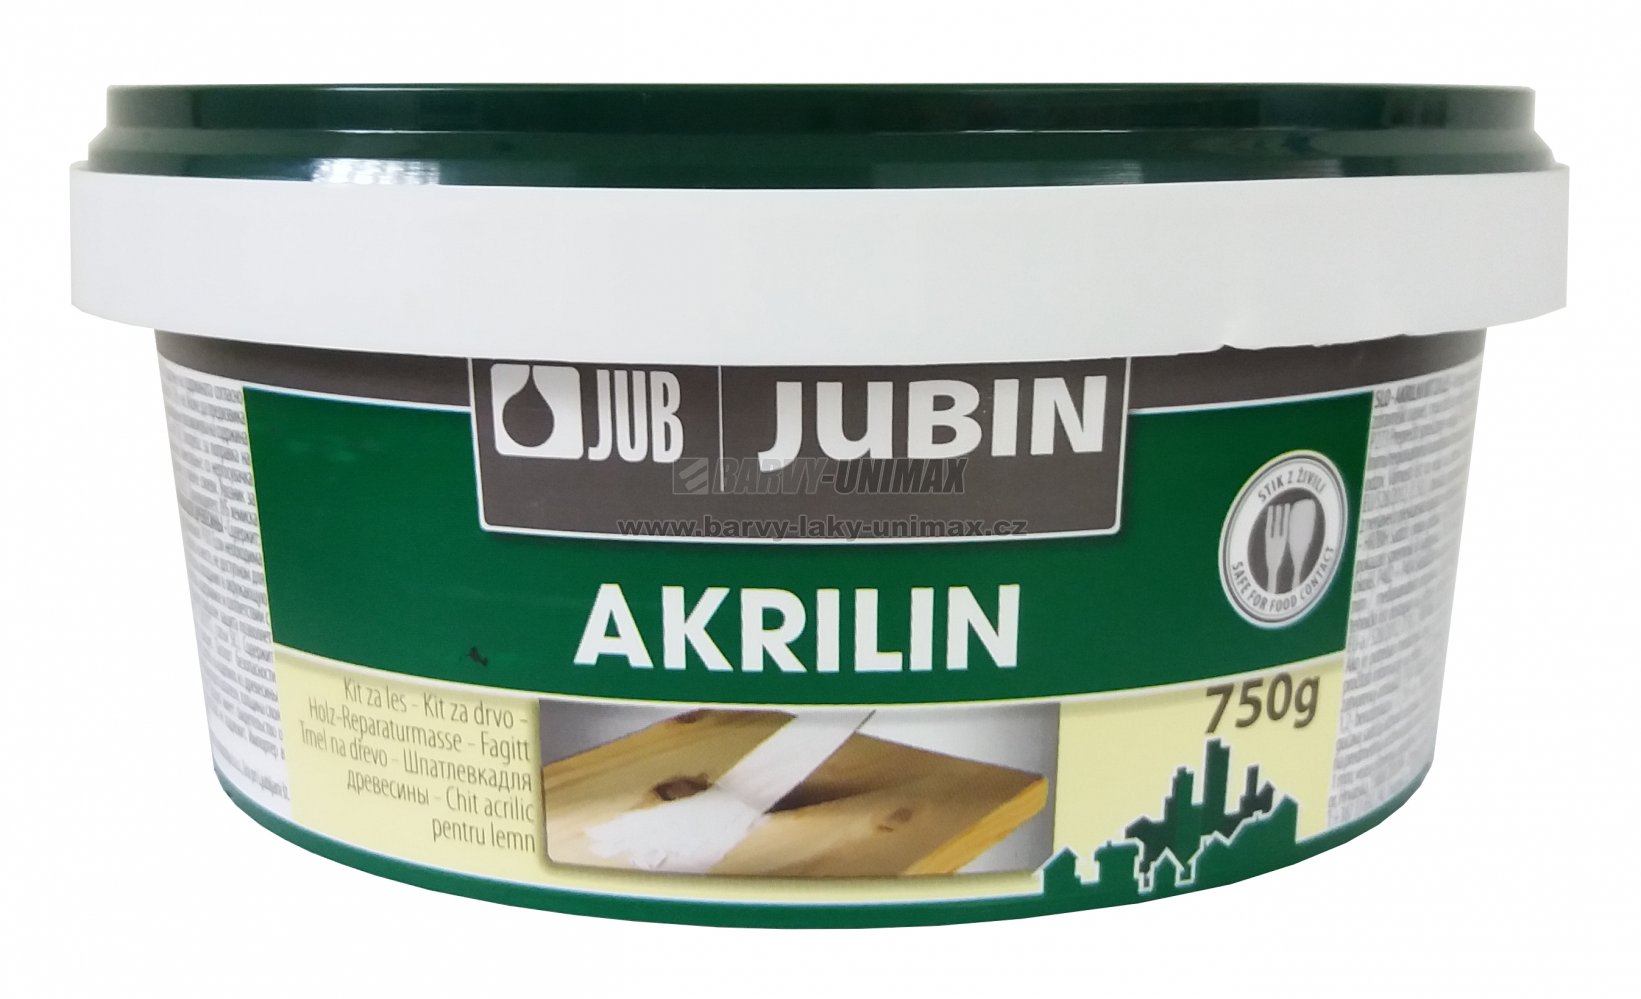 JUB JUBIN Akrilin Smrek,750g